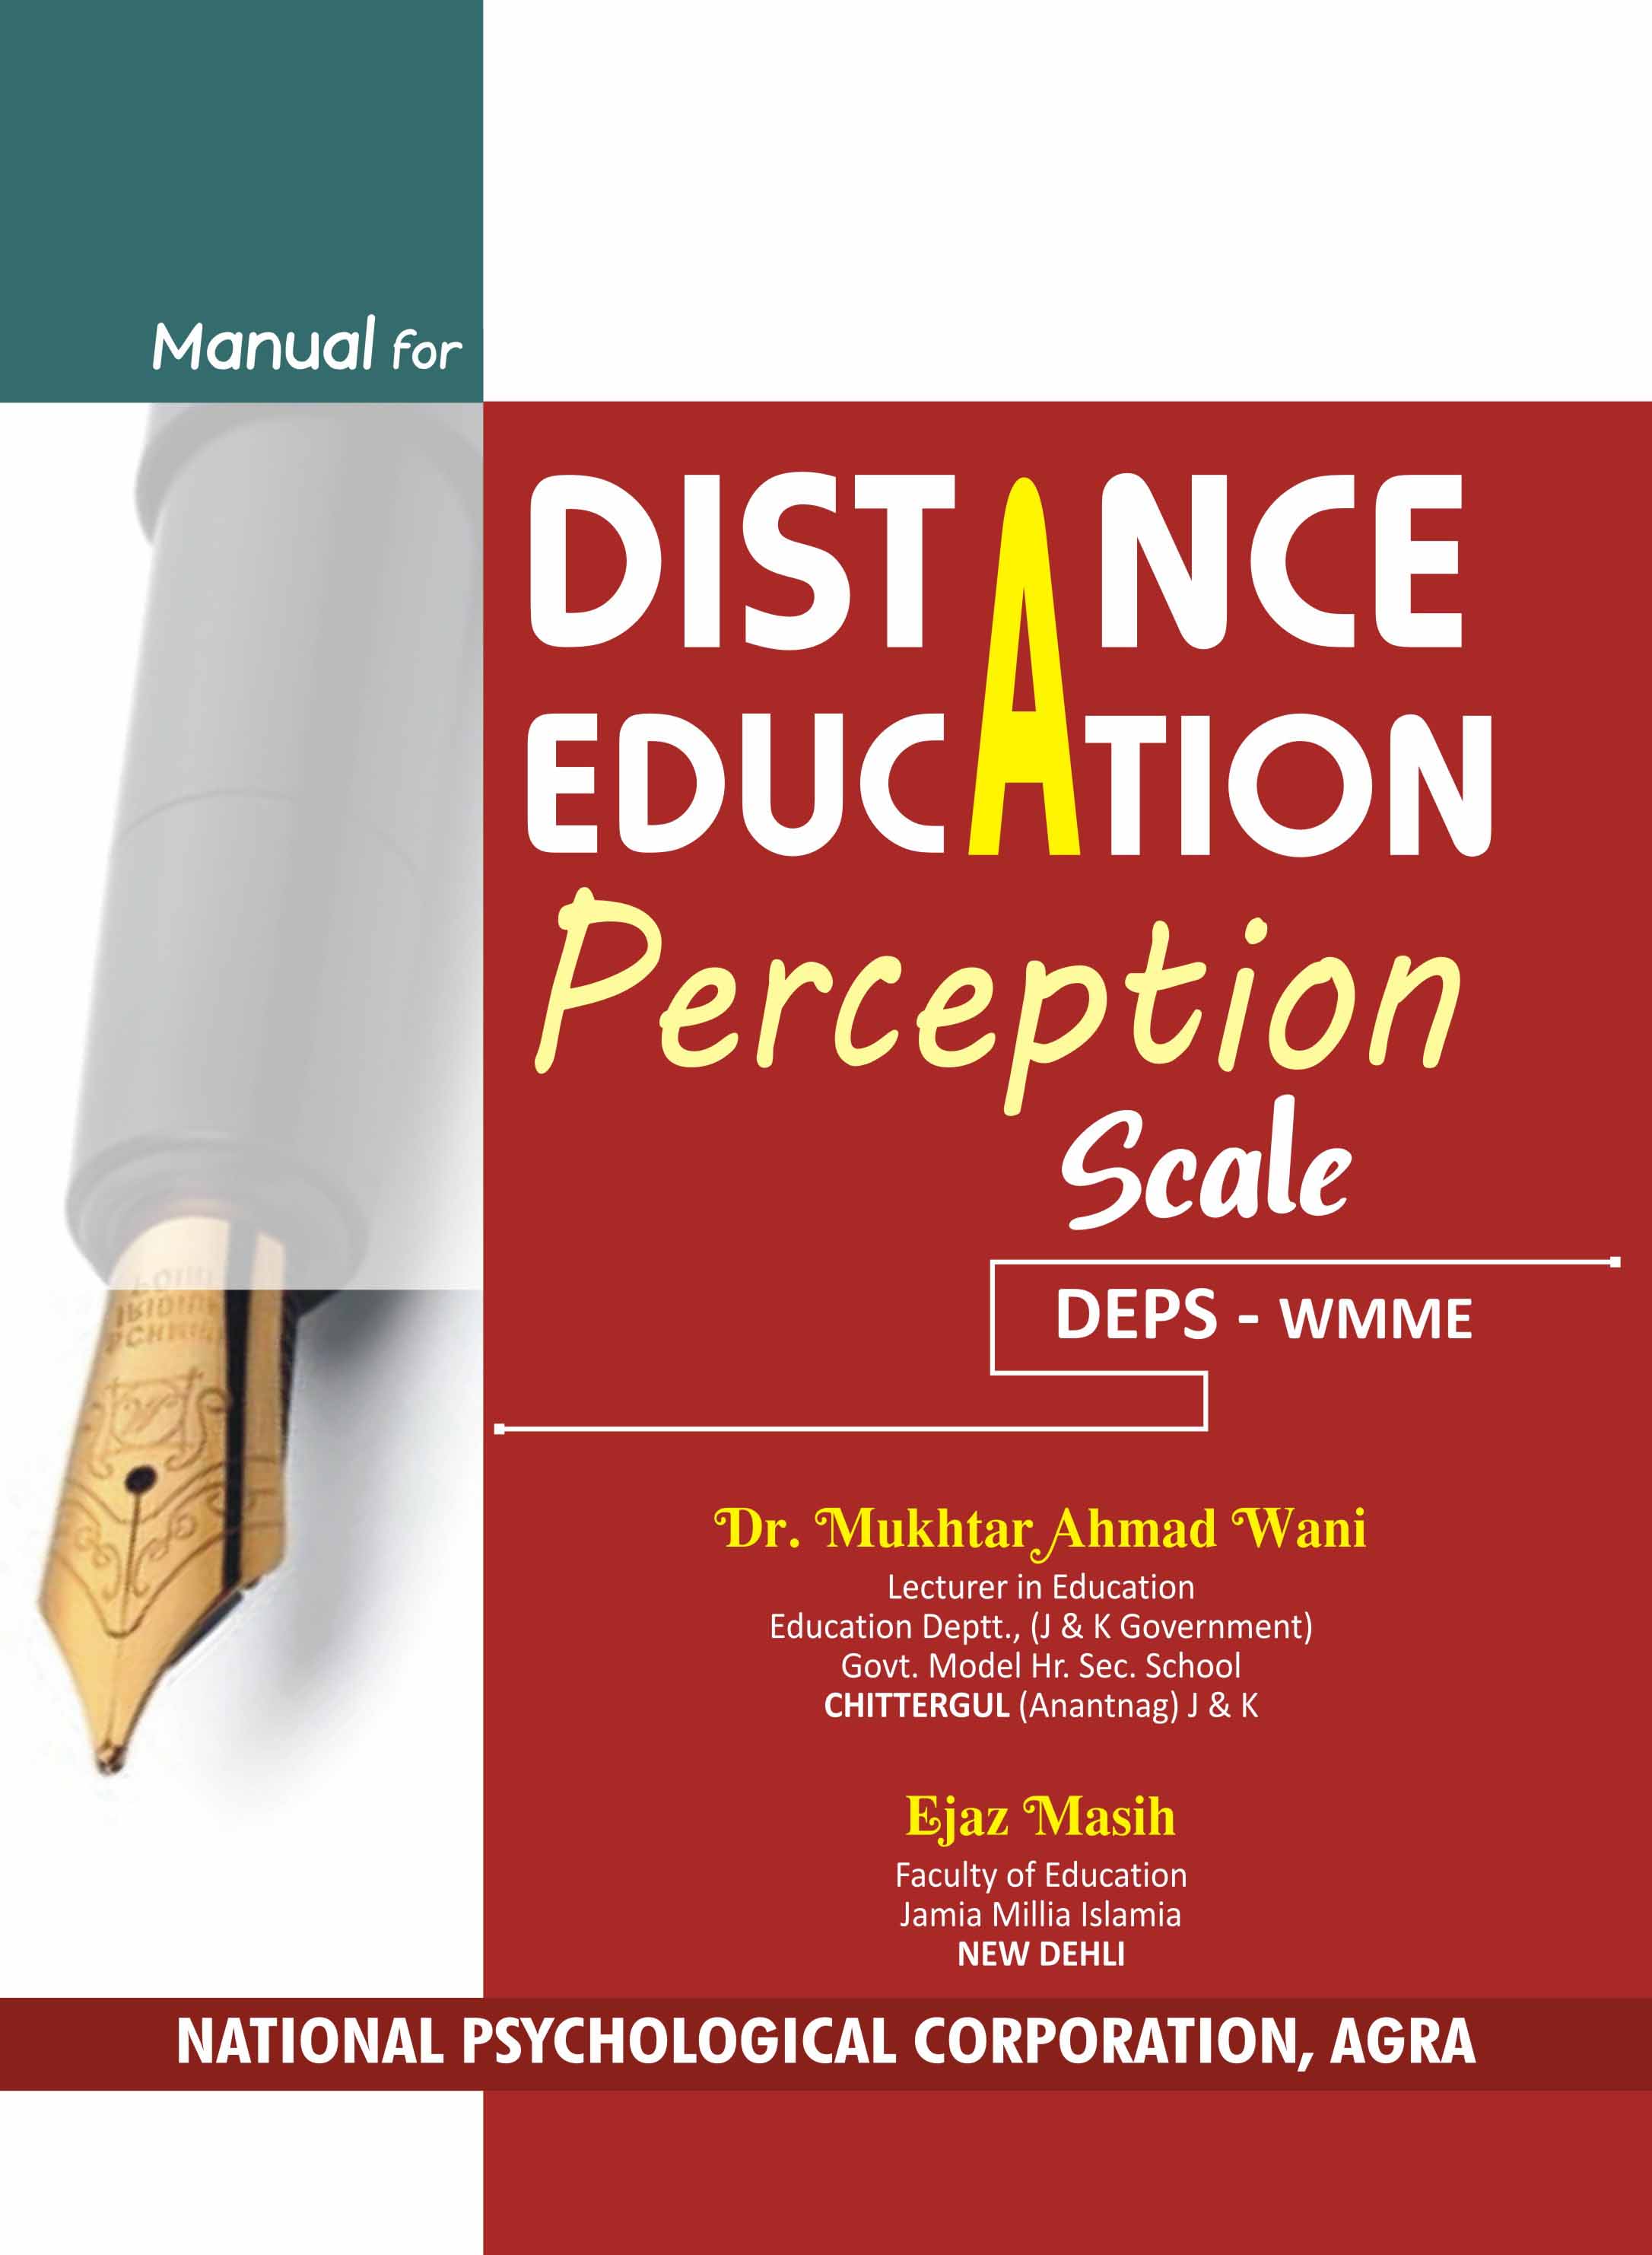 DISTANCE-EDUCATION-PERCEPTION-SCALE